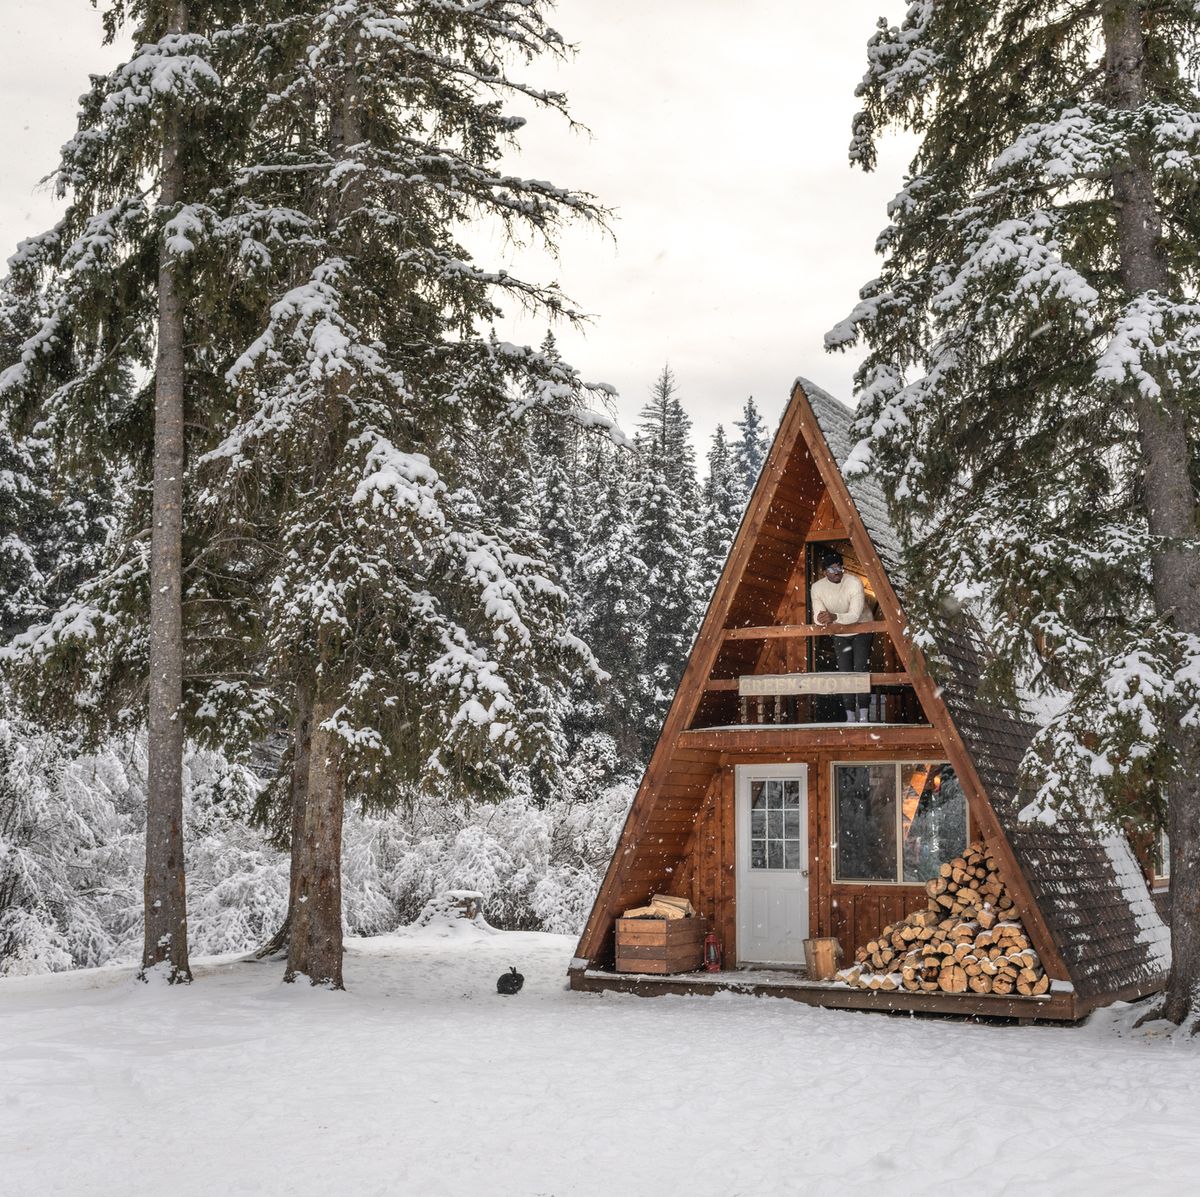 The Christmas Lodge (Snowy Pine Ridge)